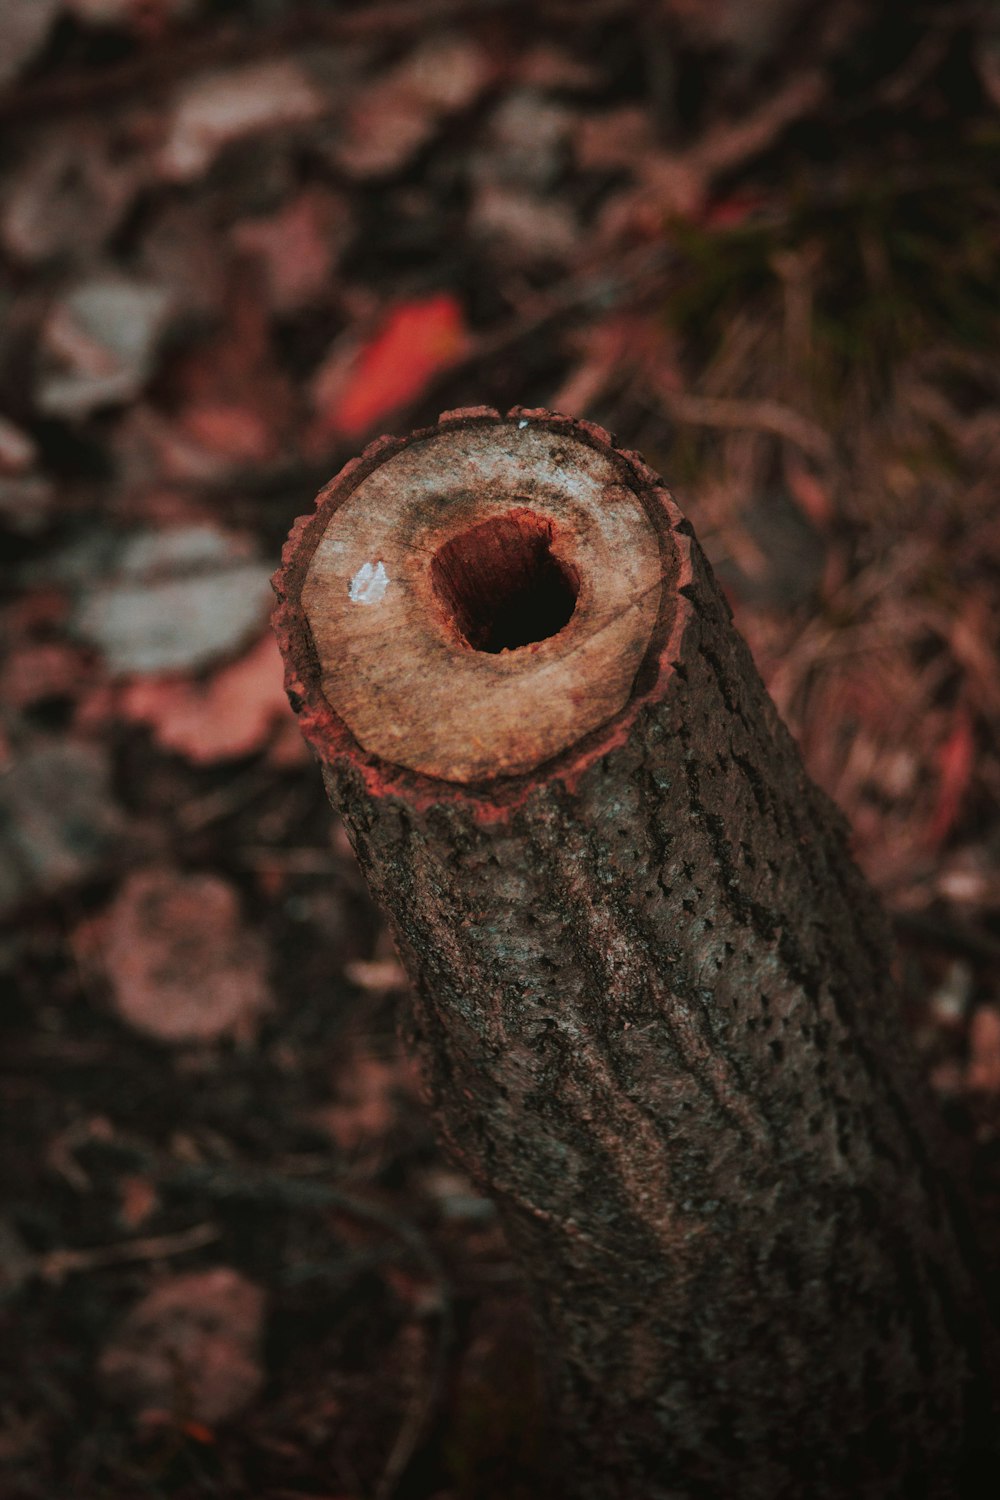 selective focus photography of wood log